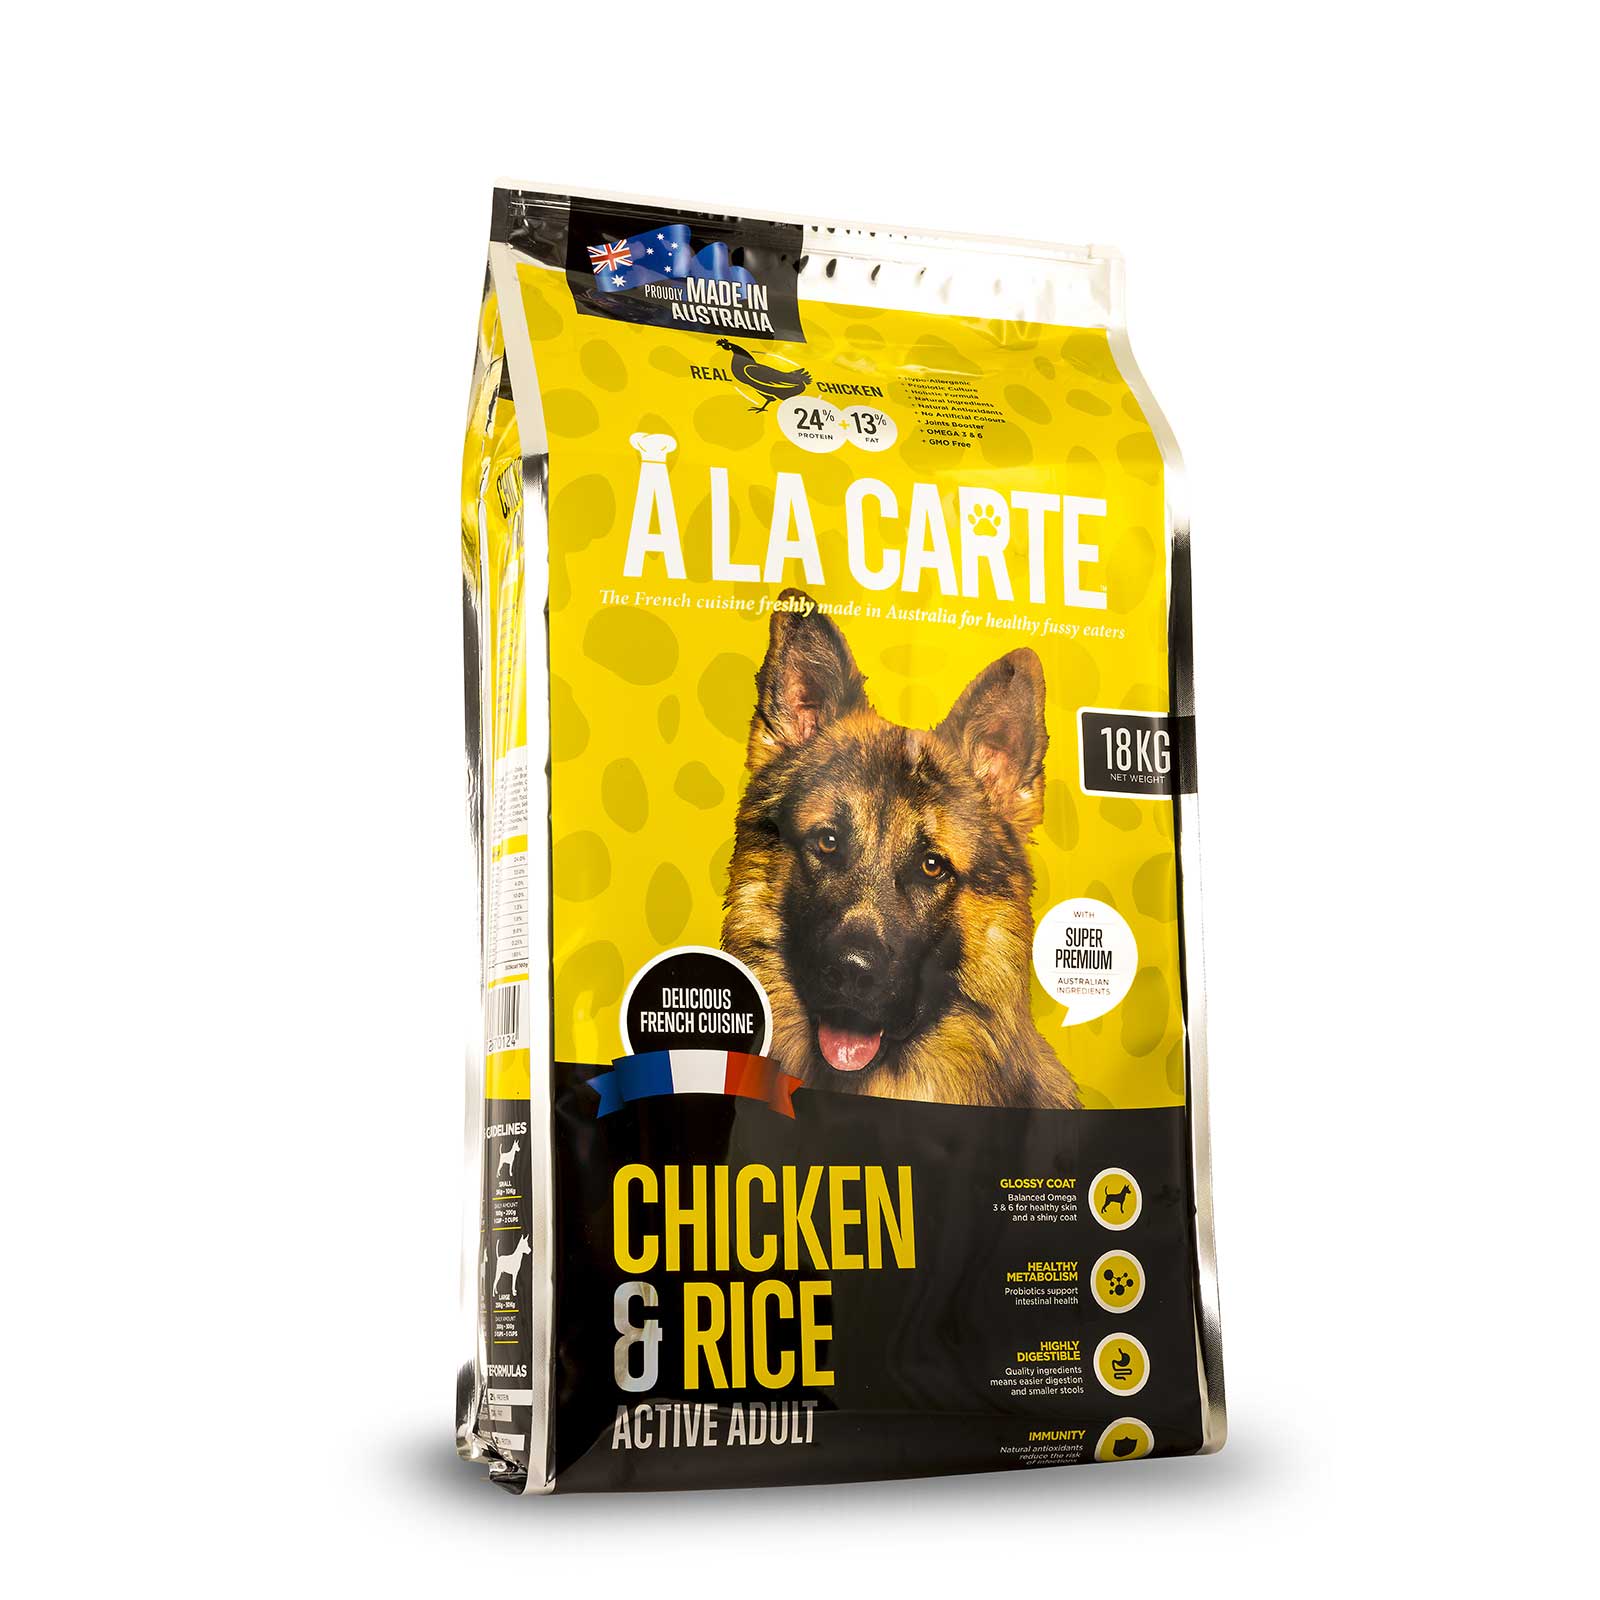 A La Carte Dog Food Adult Chicken & Rice